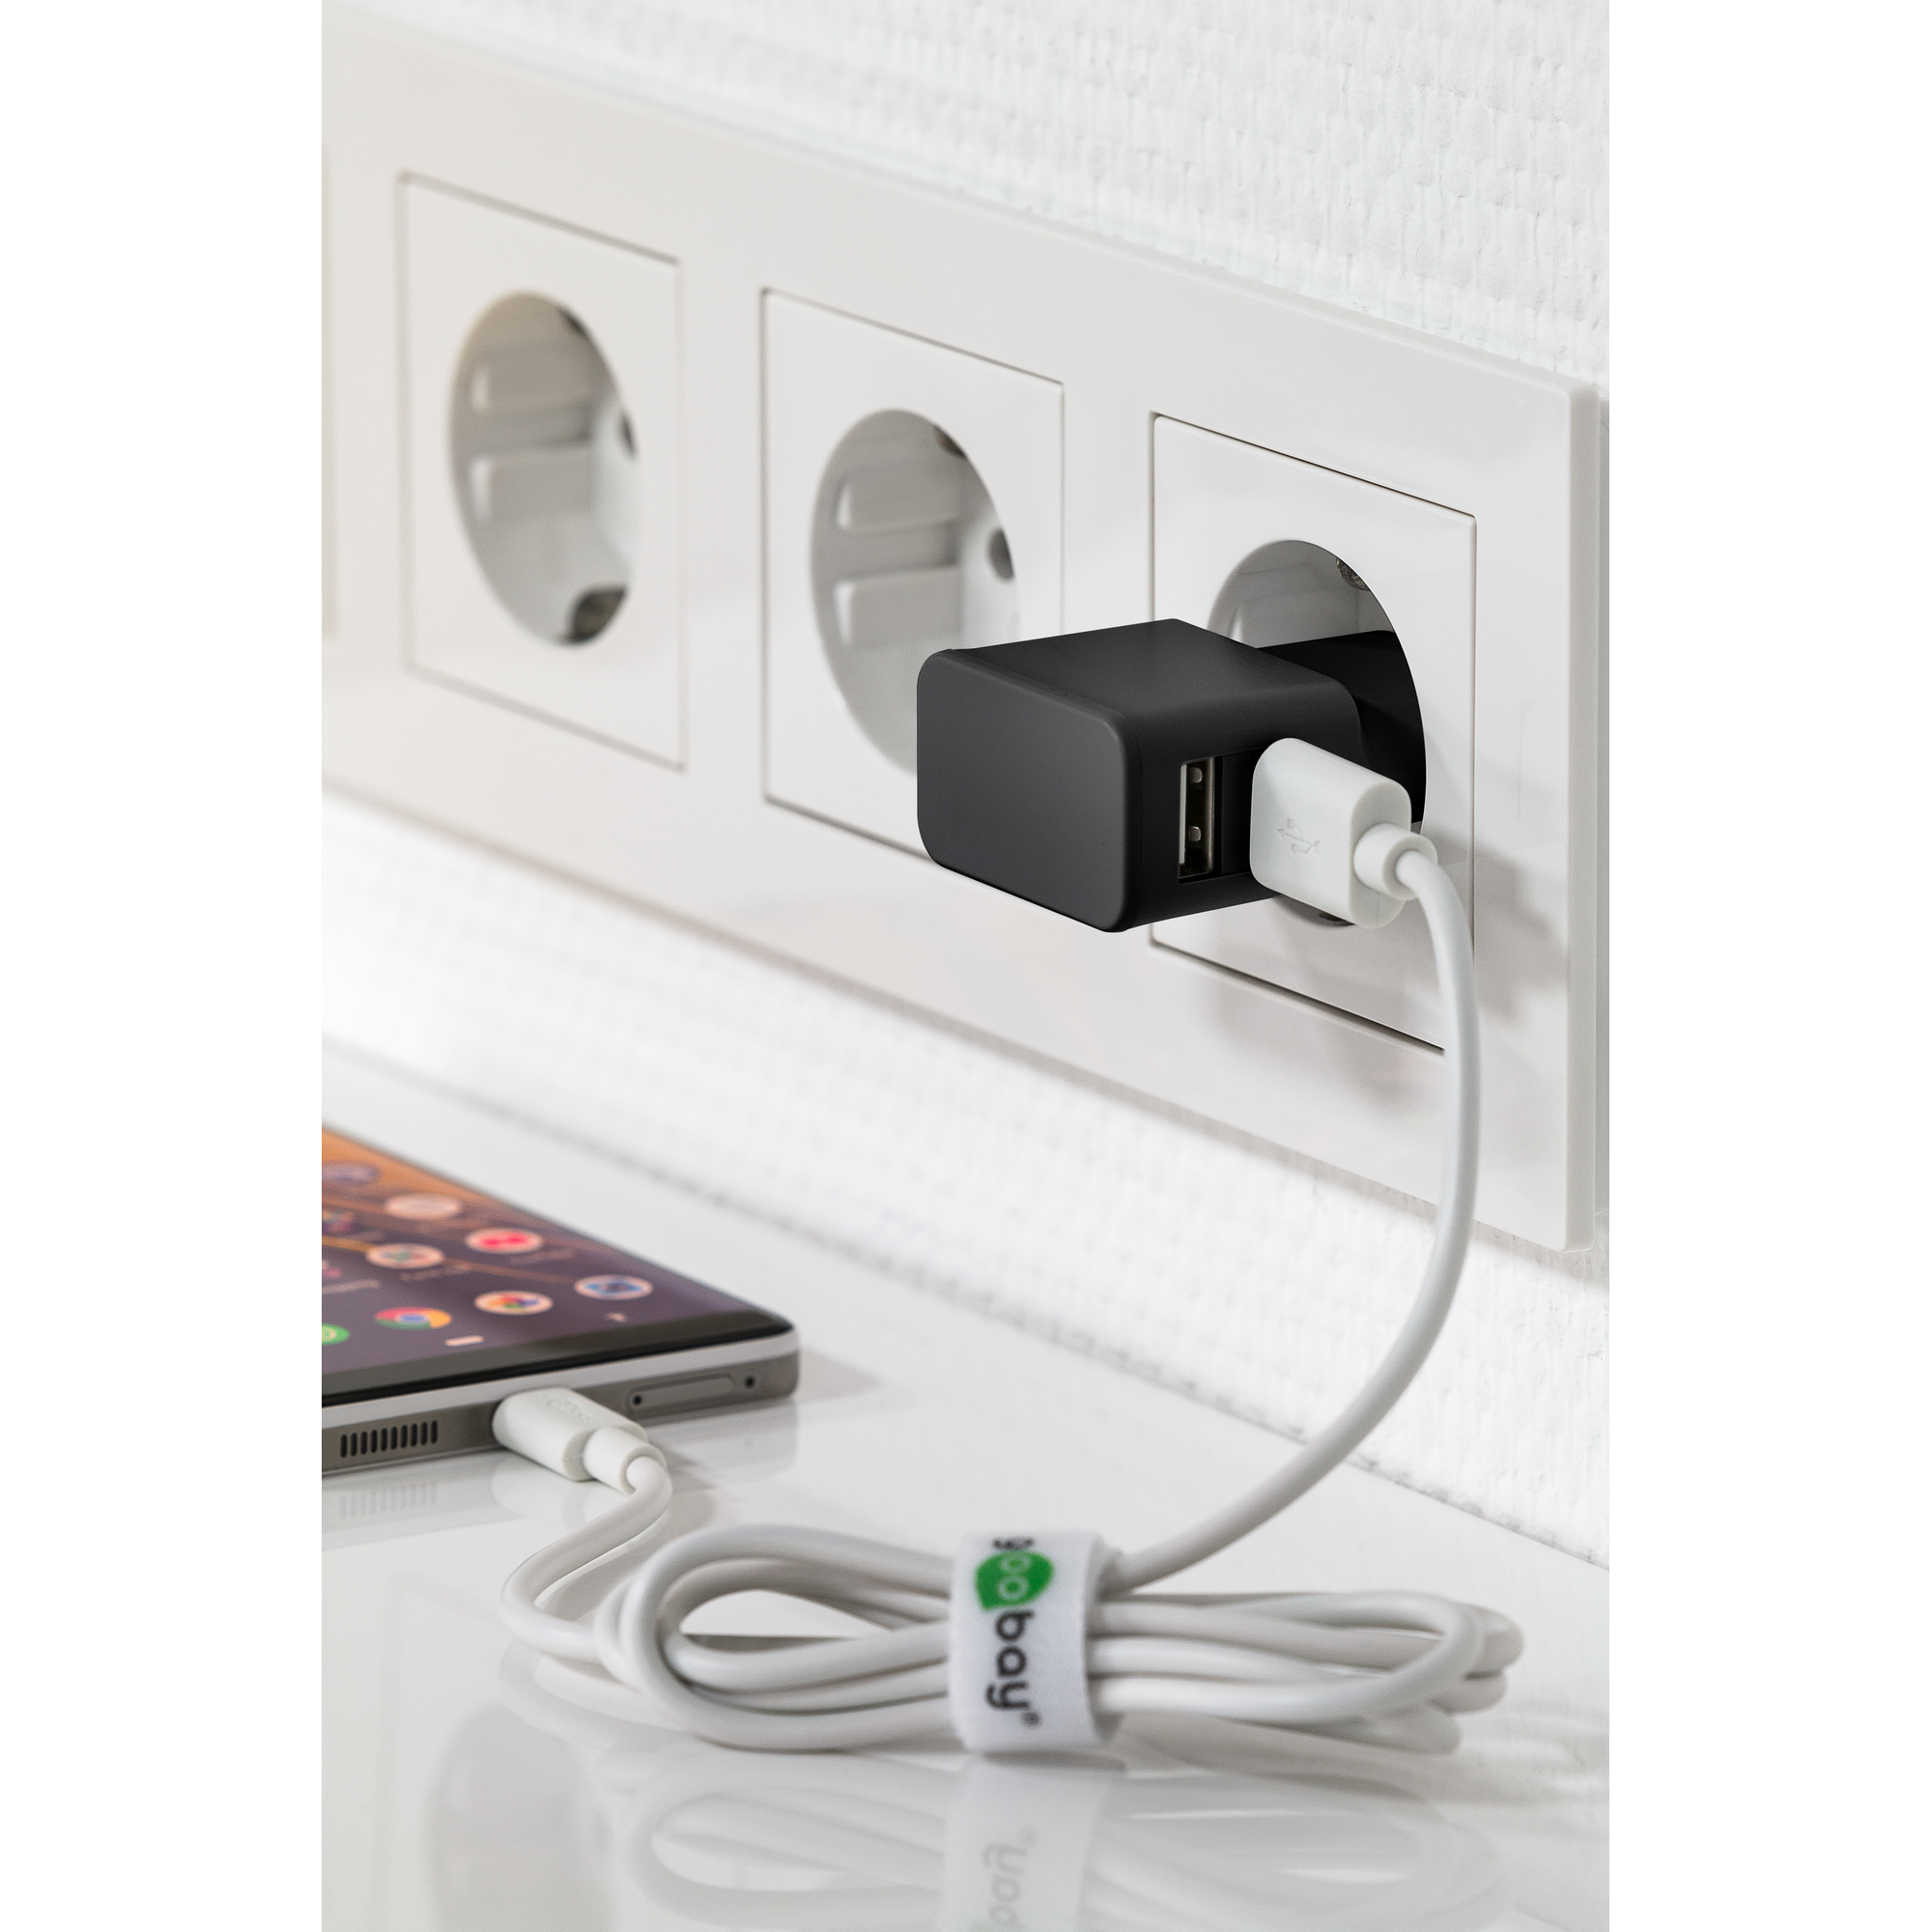 Dual-USB-Ladegerät, MicroUSB Ladekabel + product picture